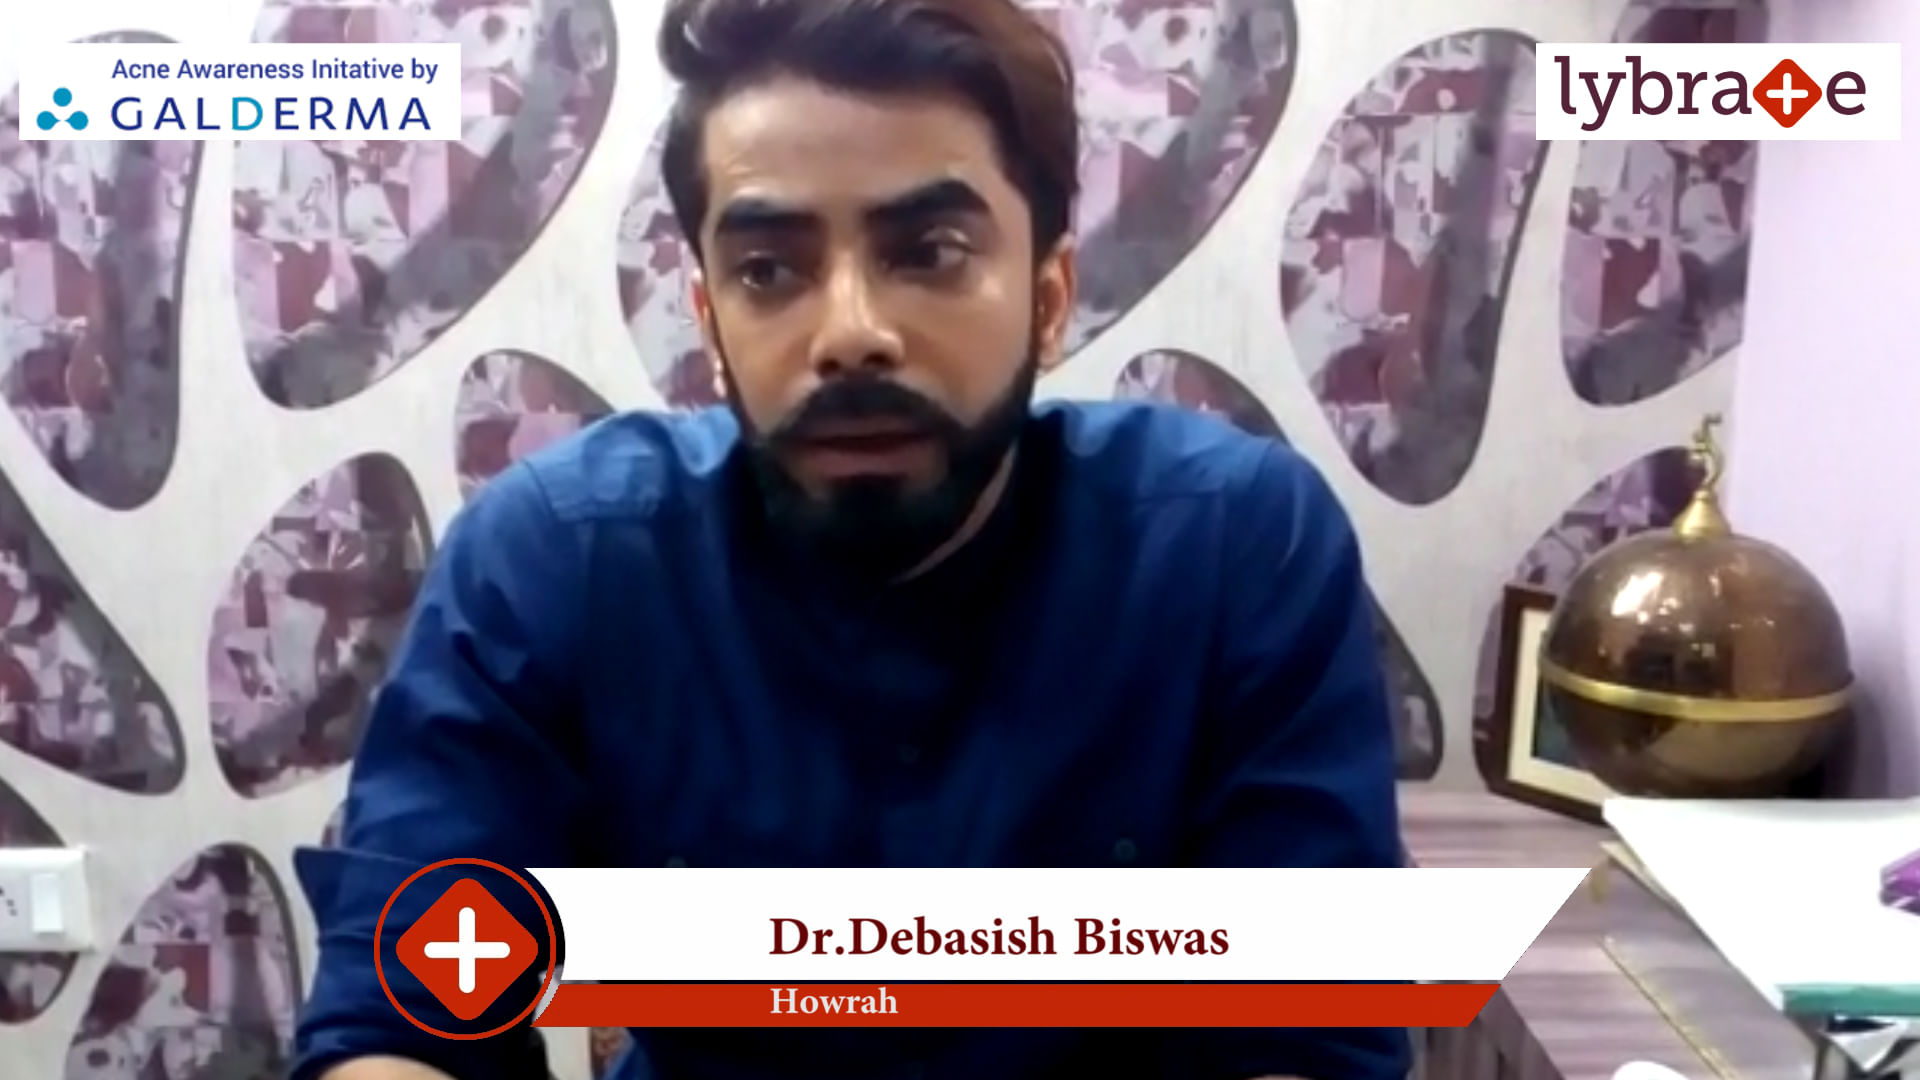 Lybrate | Dr. Debasish Biswas speaks on IMPORTANCE OF TREATING ACNE EARLY